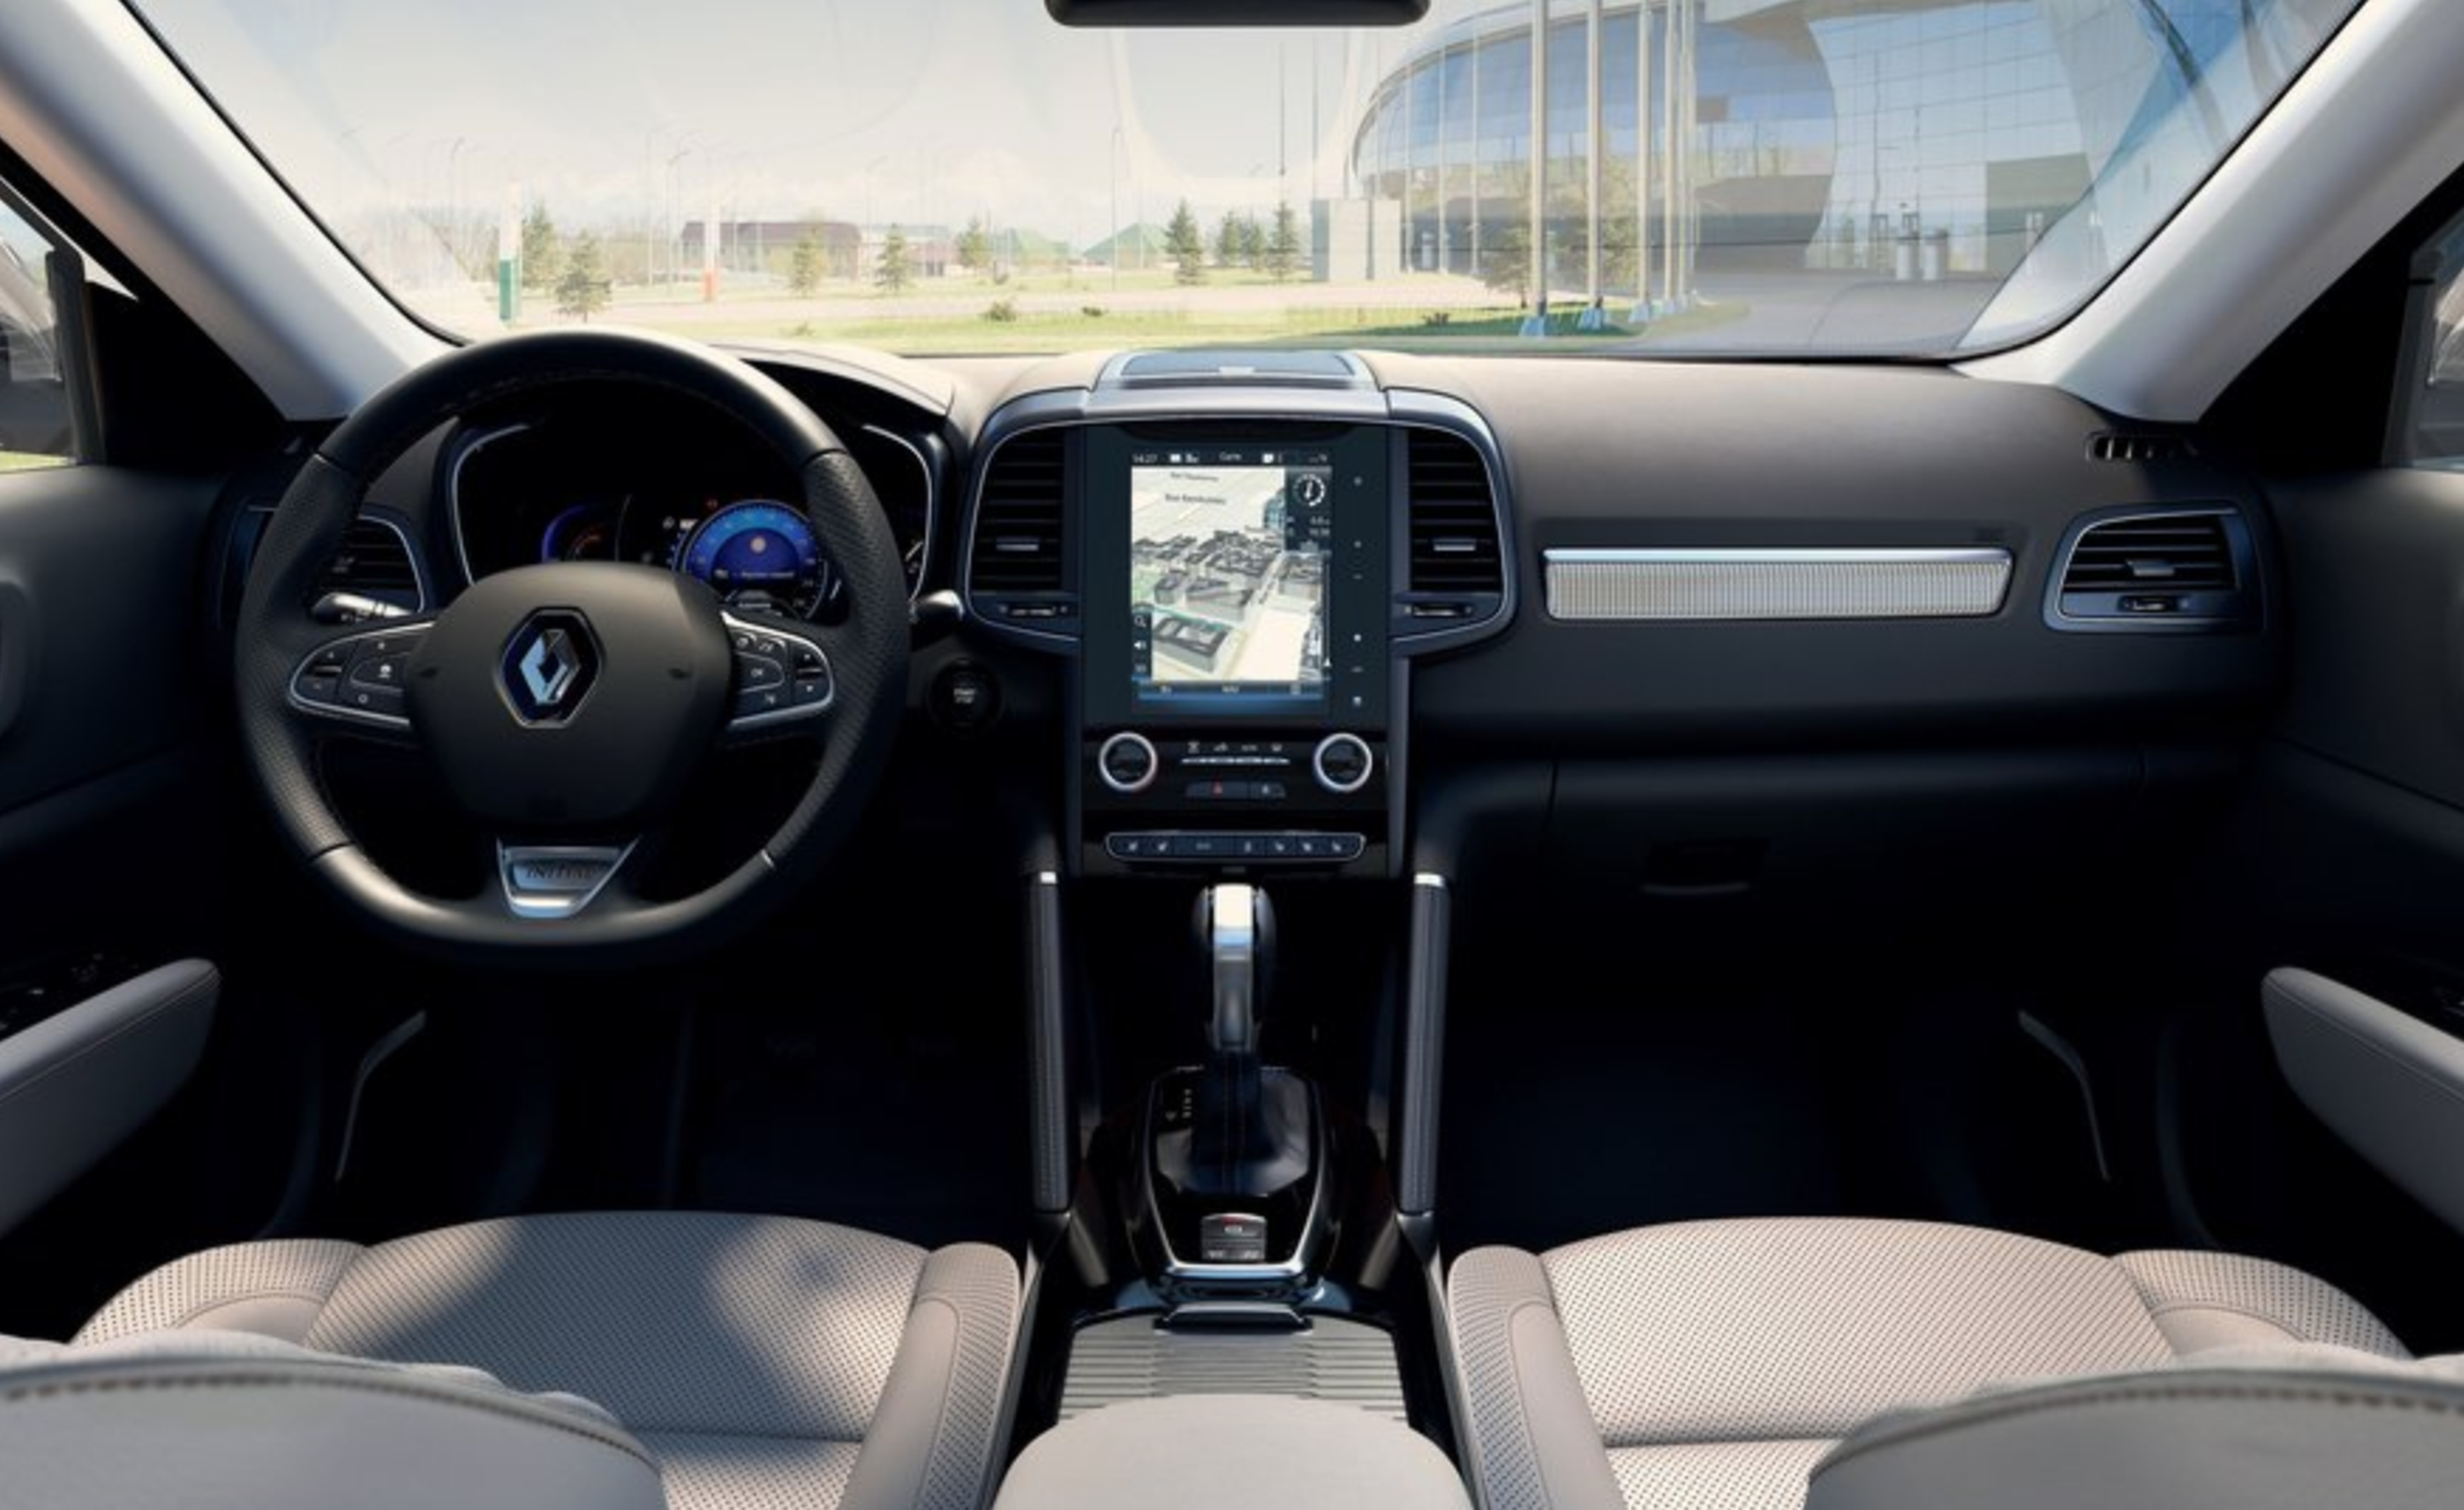 Prueba Renault Koleos interior